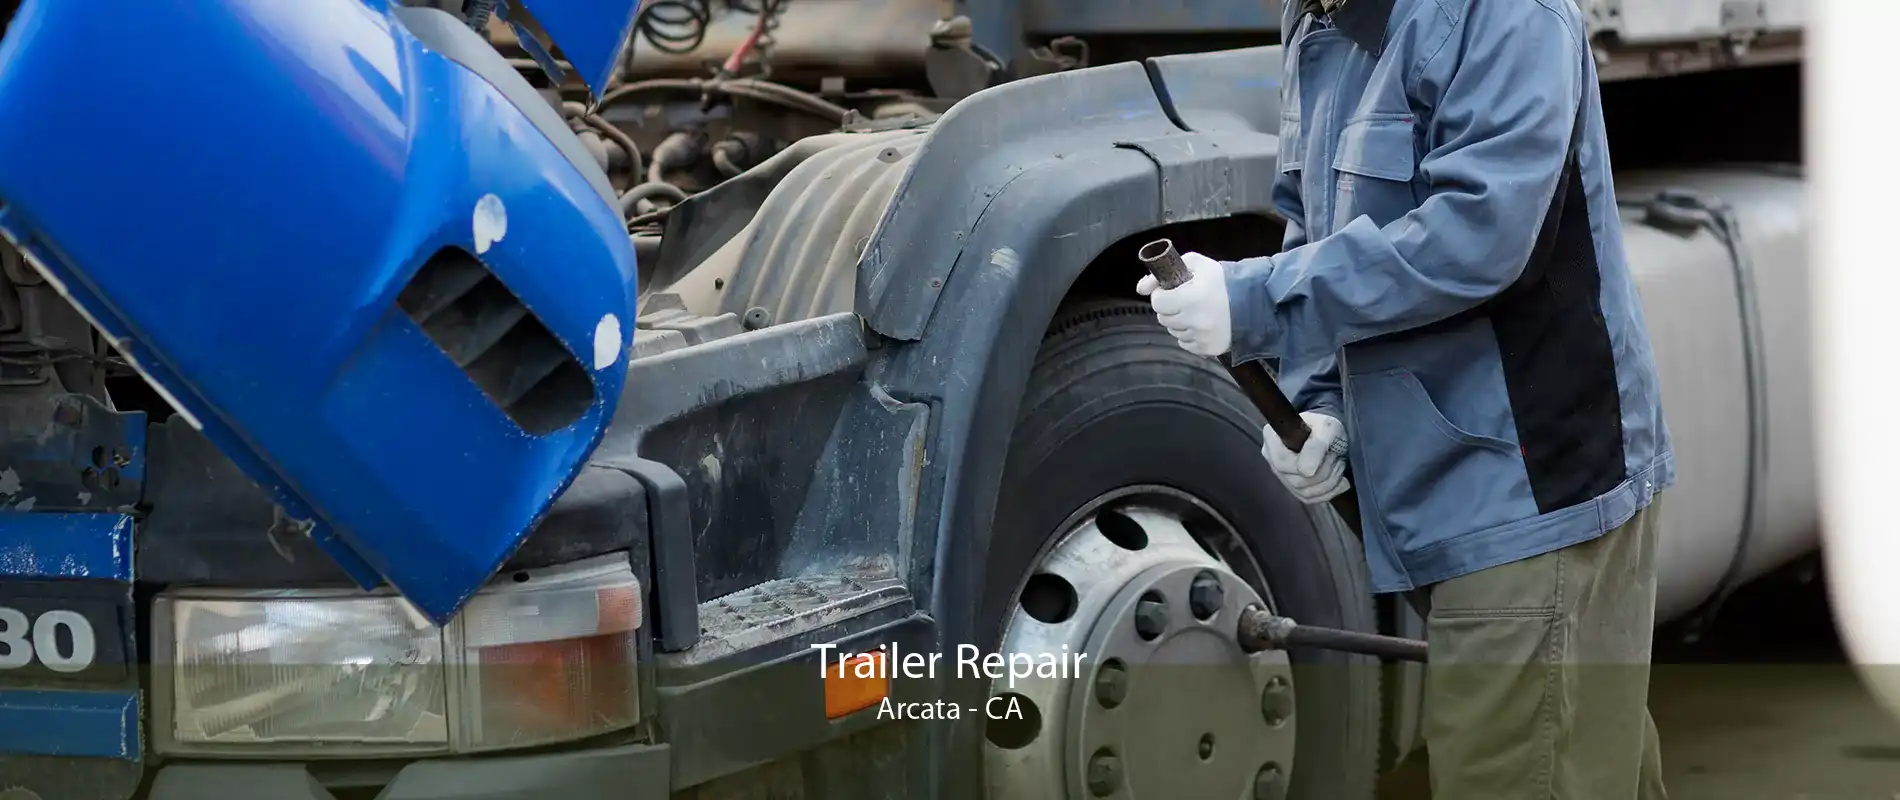 Trailer Repair Arcata - CA